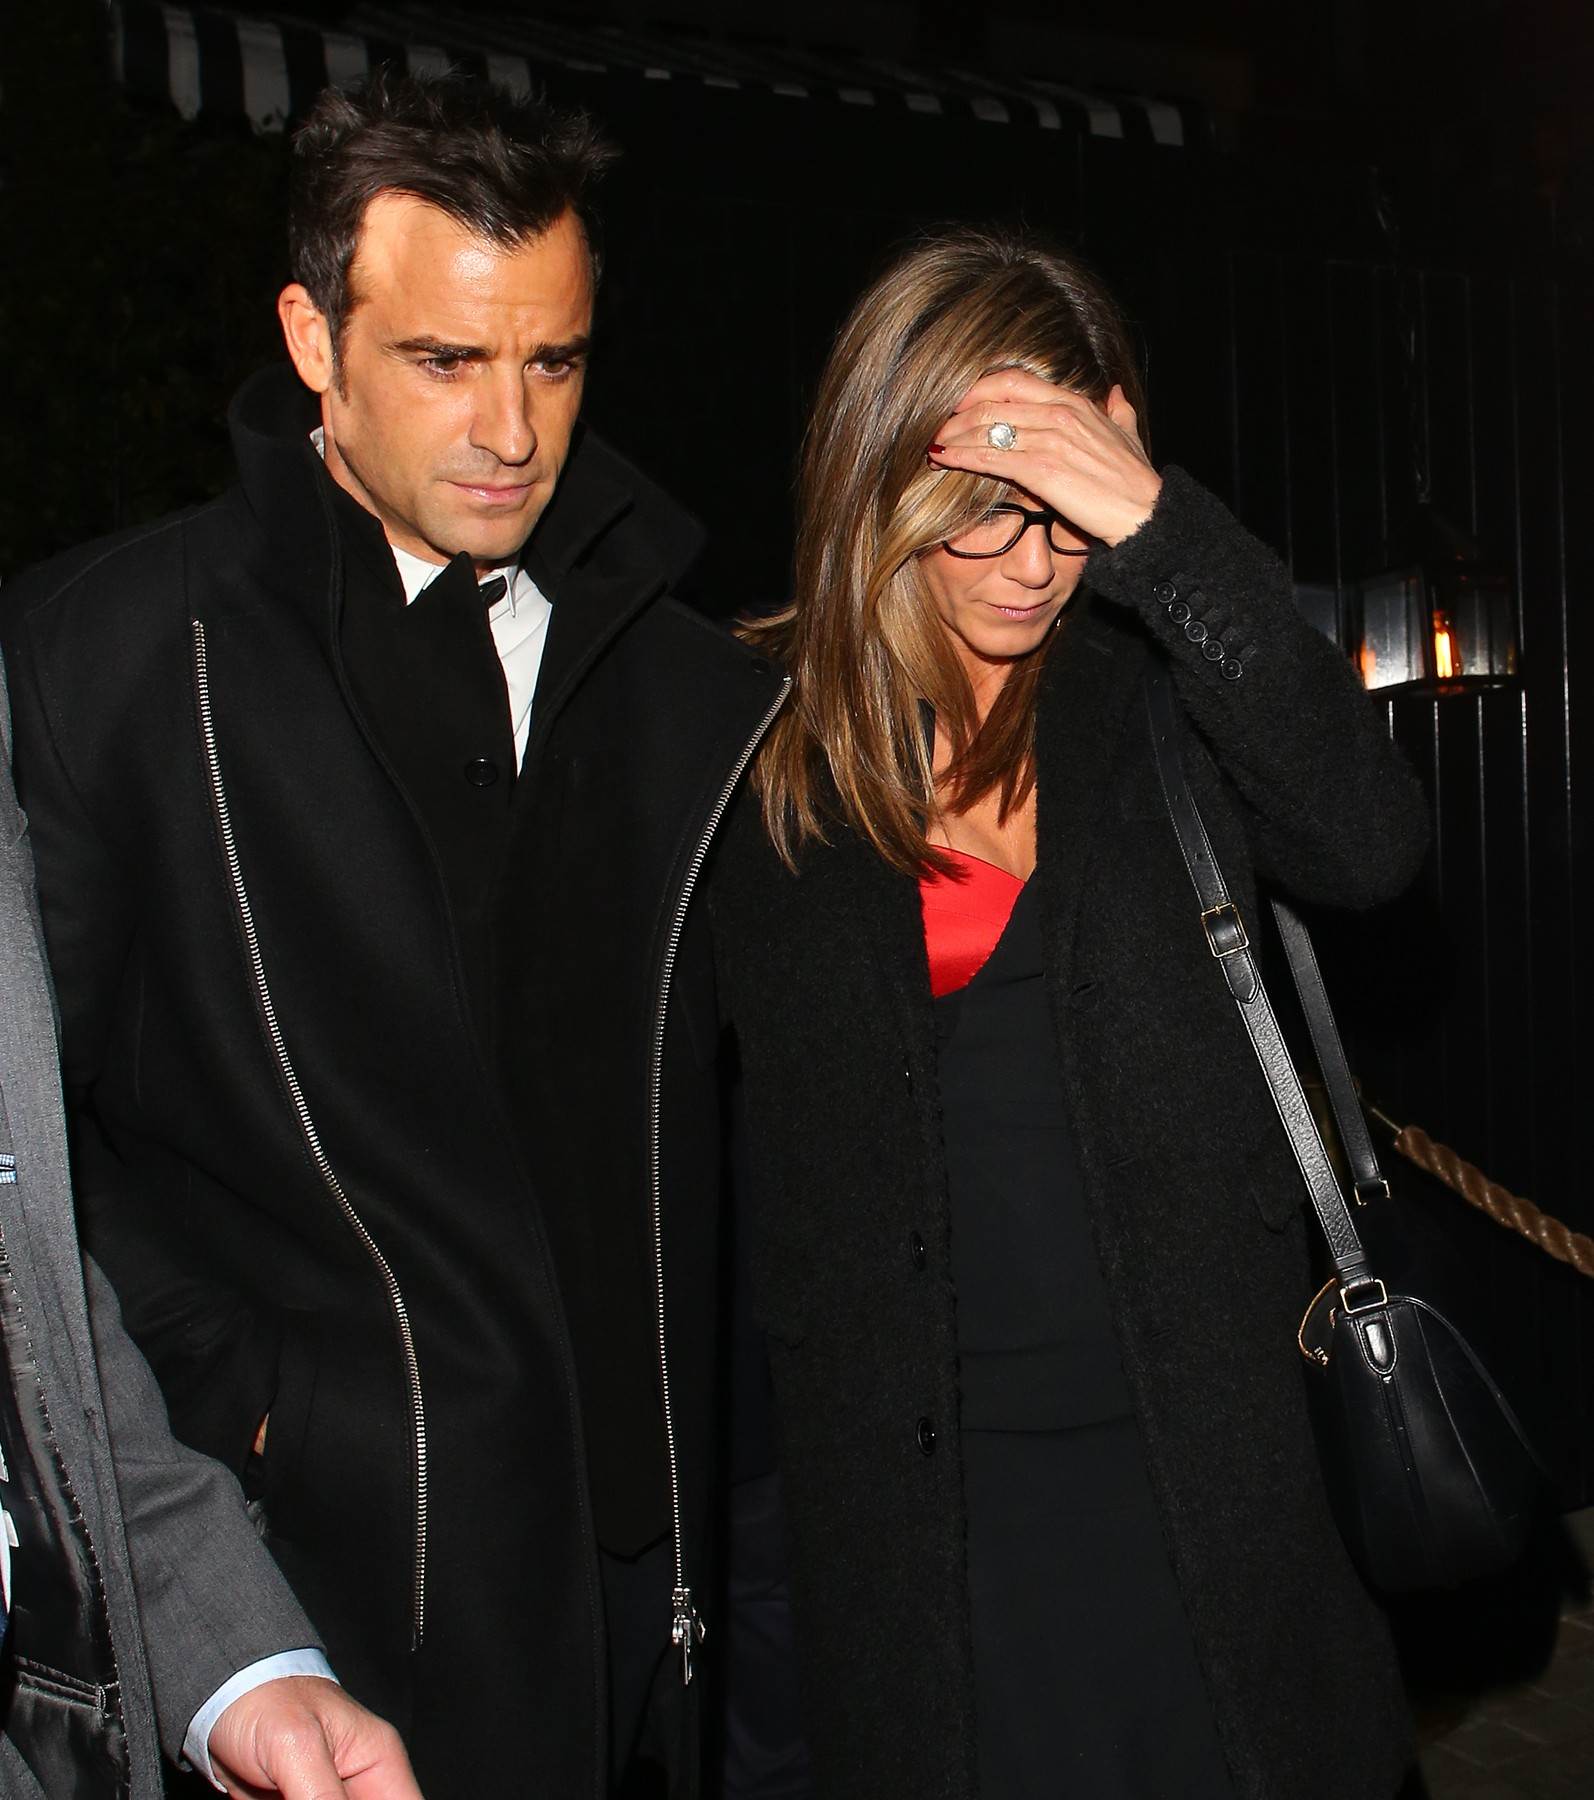 DAO JE VELIKI INTERVJU Justin Theroux prvi put o razvodu s Jennifer Aniston